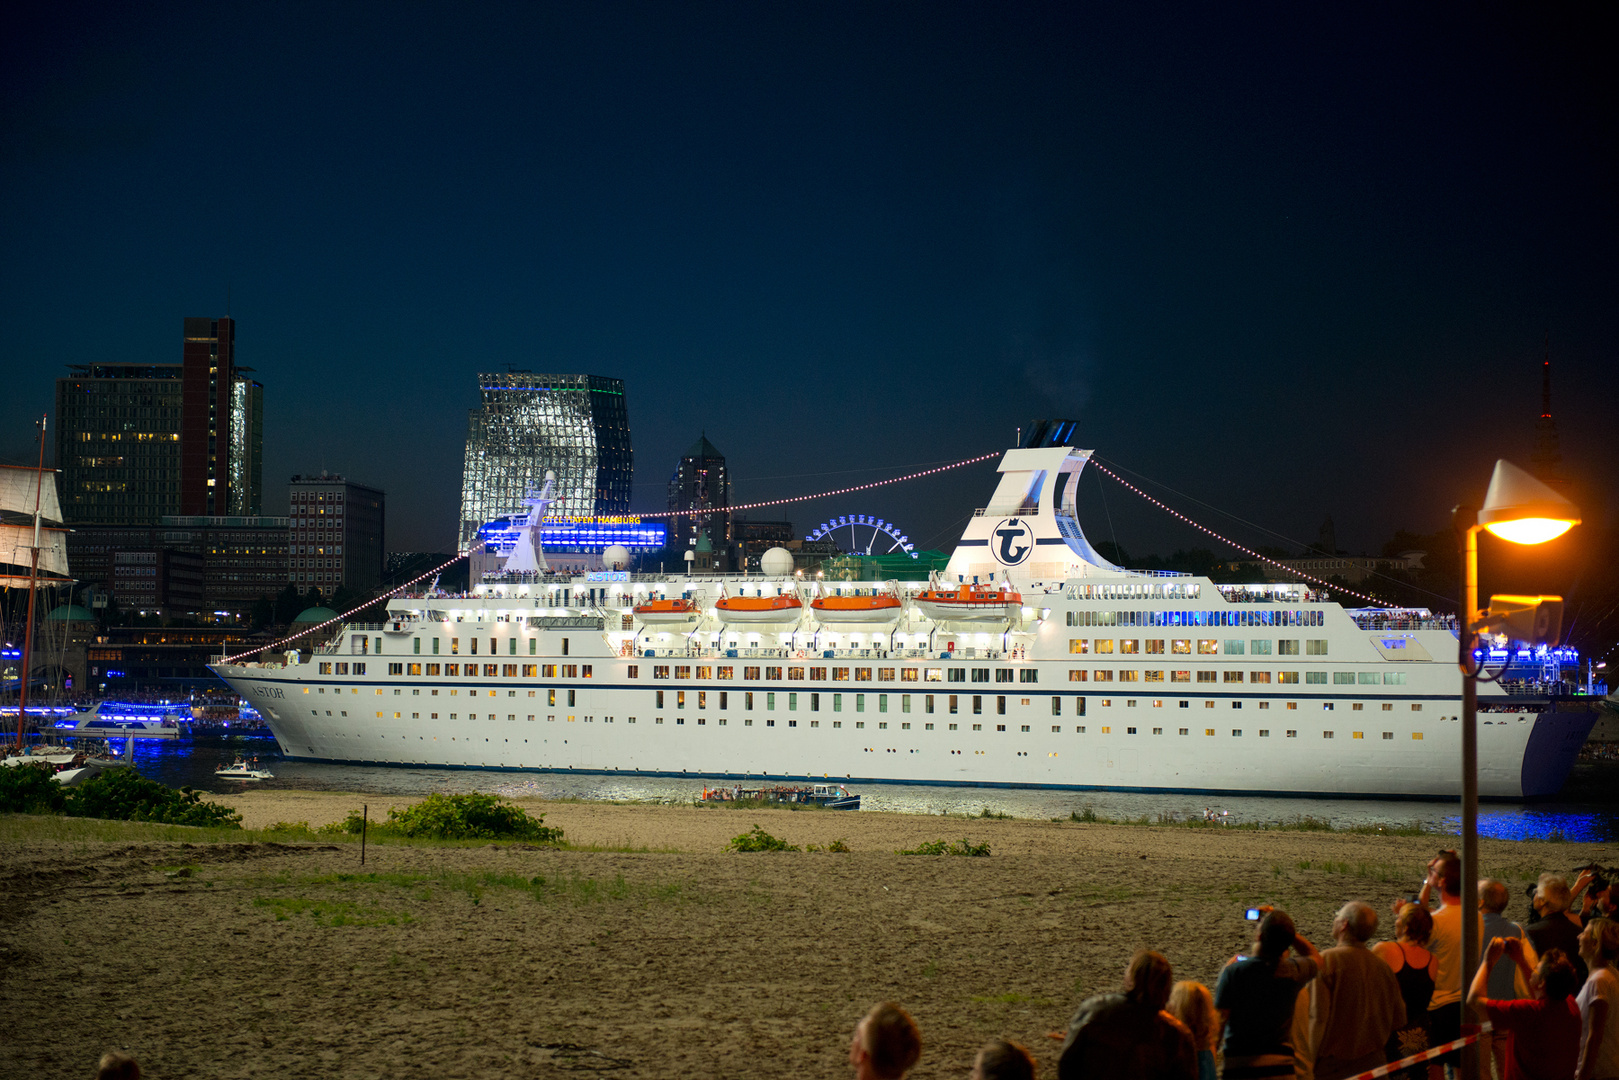 mv Astor leaving Hamburg at the Cruise Days 2012